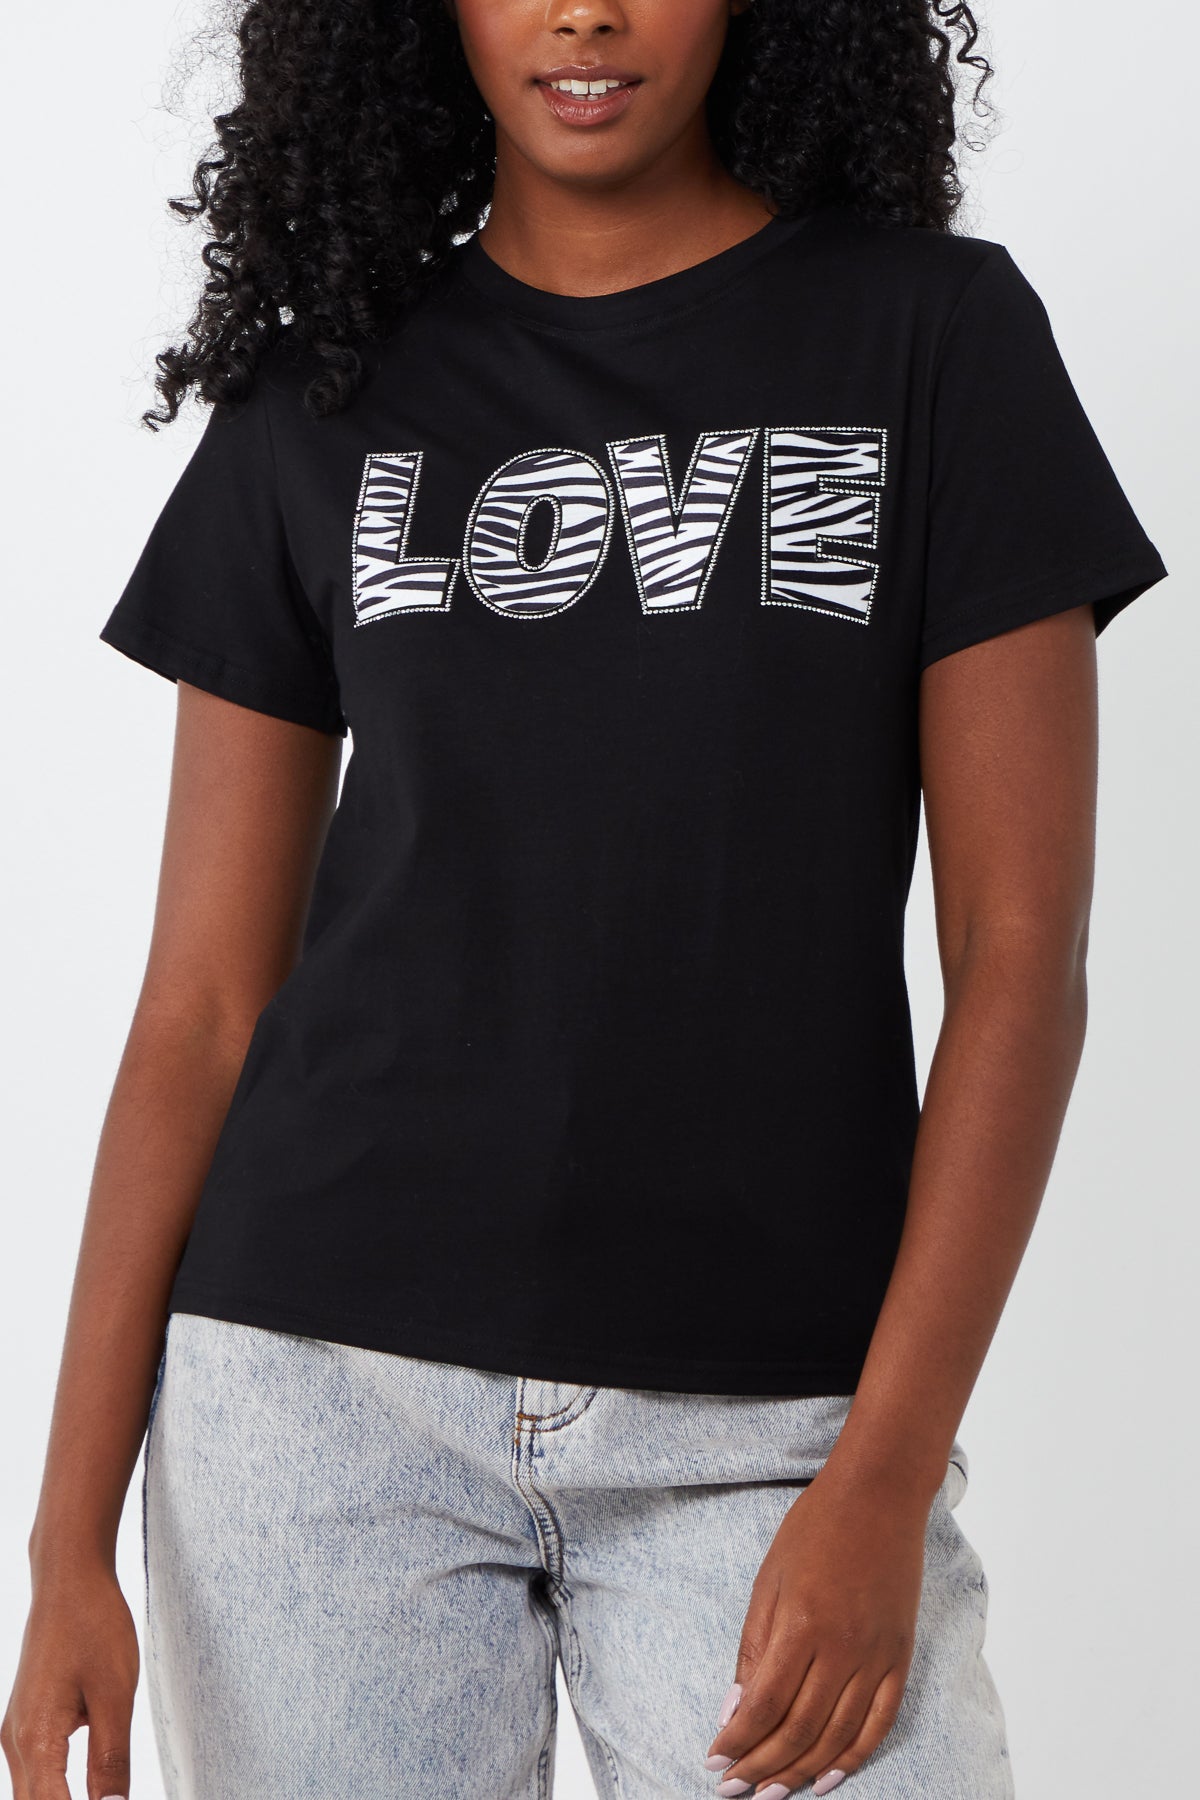 Zebra Print Love T-Shirt